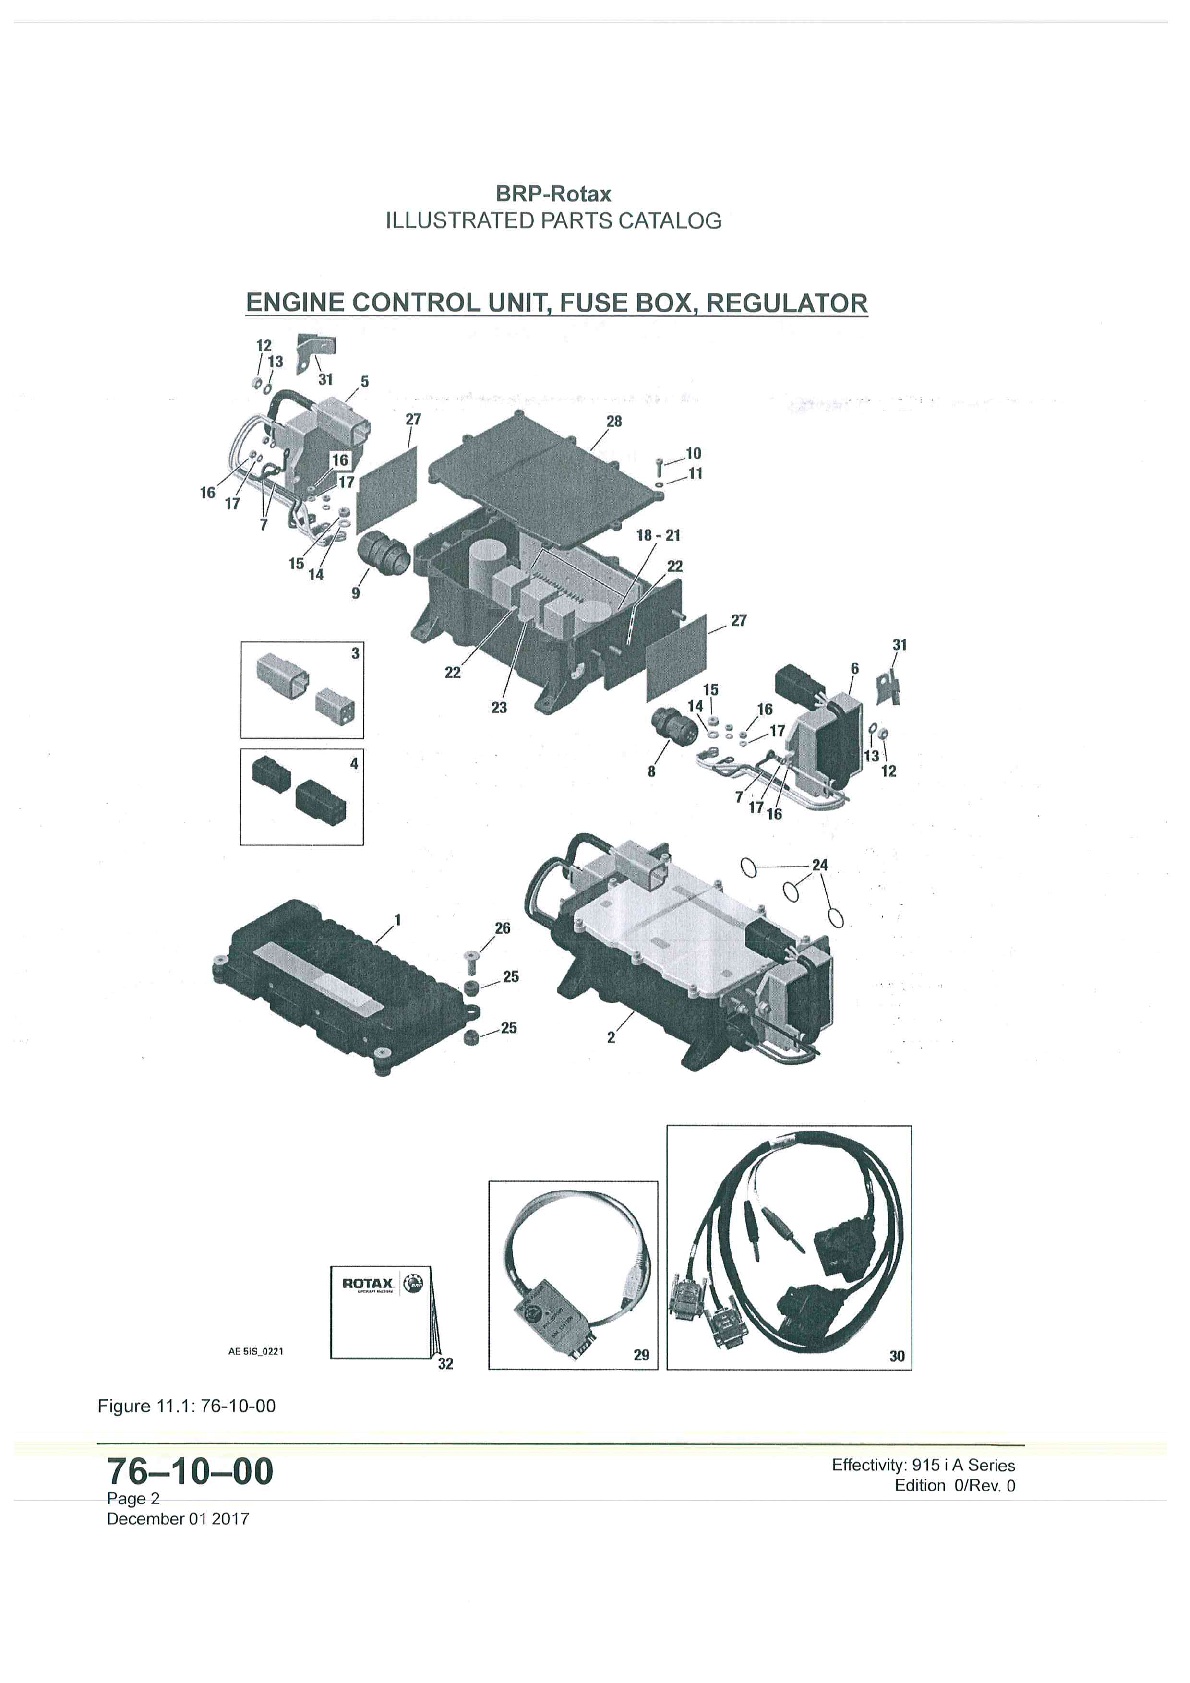 ENGINE CONTROL UNIT - FUSE BOX